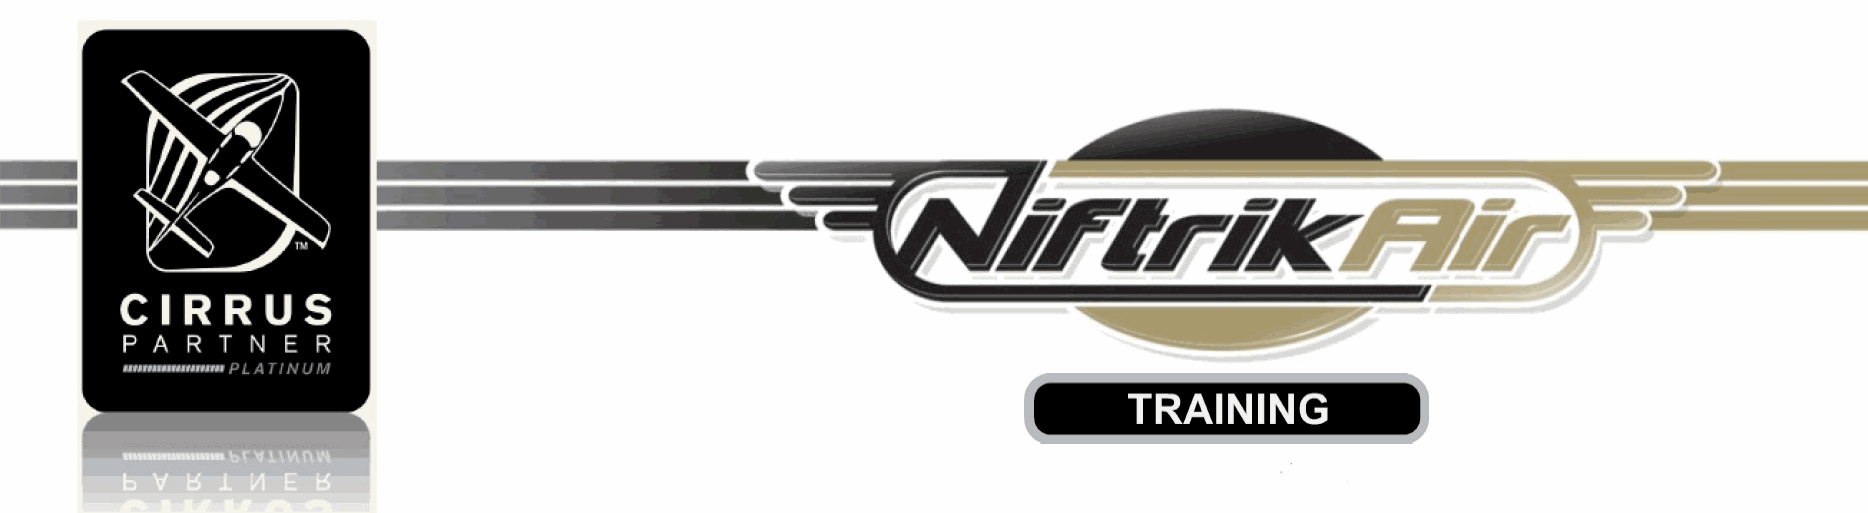 Niftrikair - Cirrus Platinum Partner / Platinum Cirrus Standardized Flight Instructor